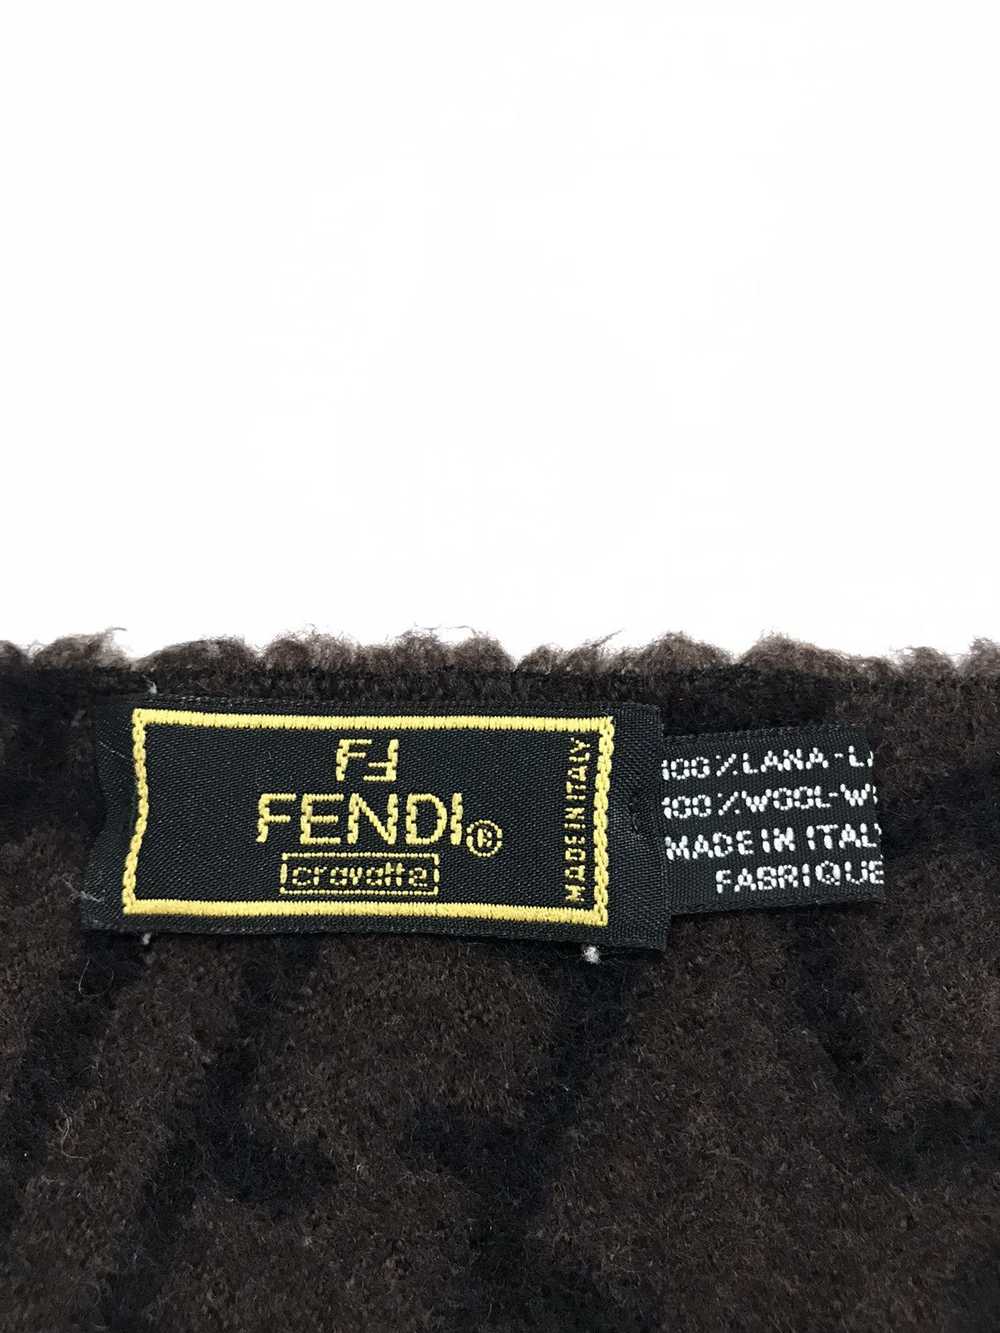 Fendi Fendi scarf muffler monograms 100% wool - image 5